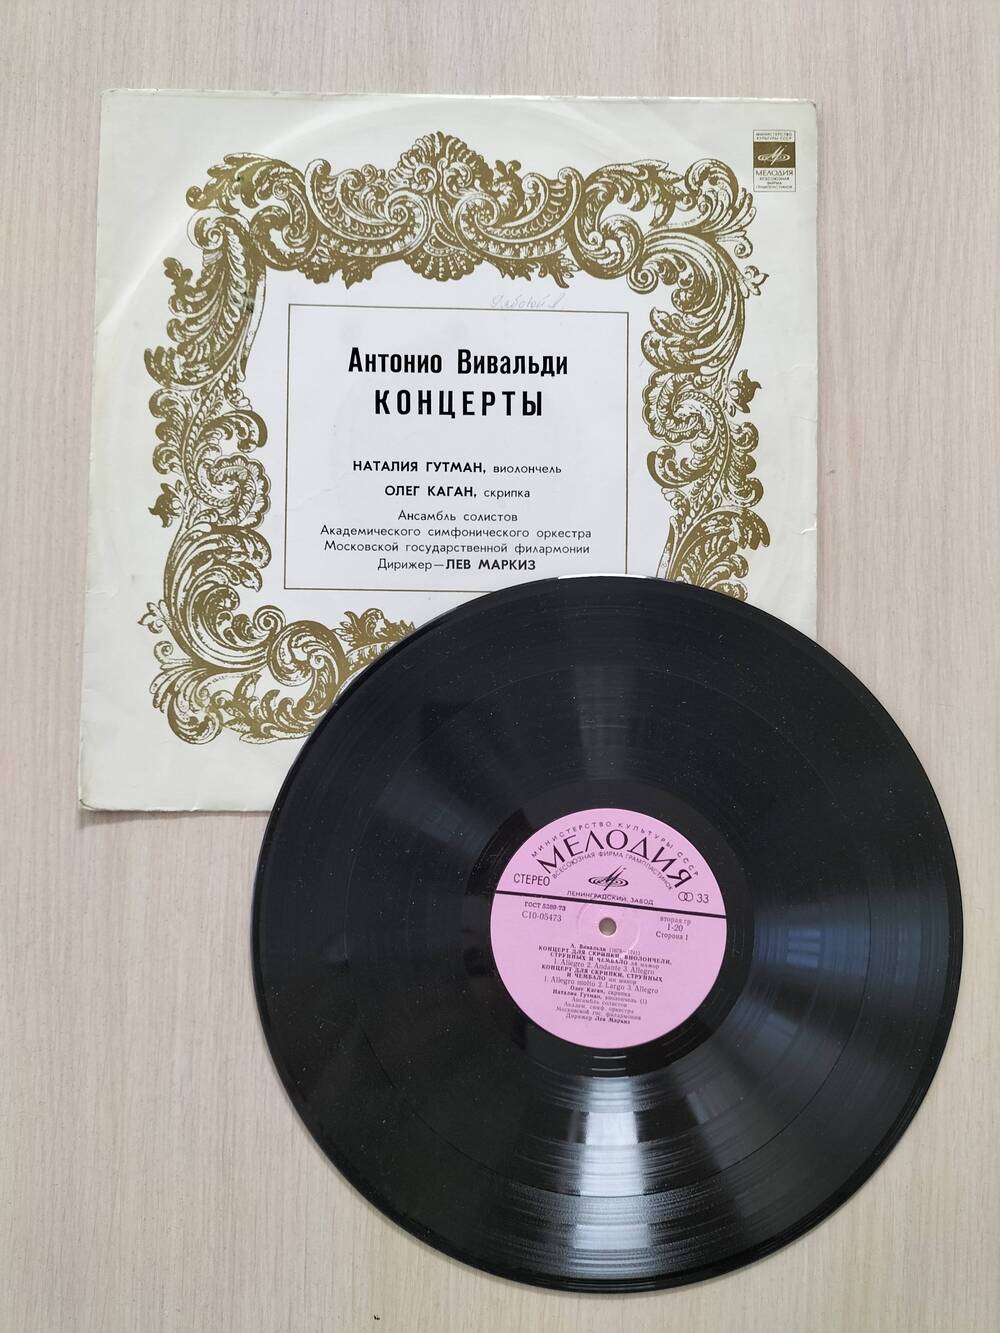 Грампластинка Антонио Вивальди. Концерты